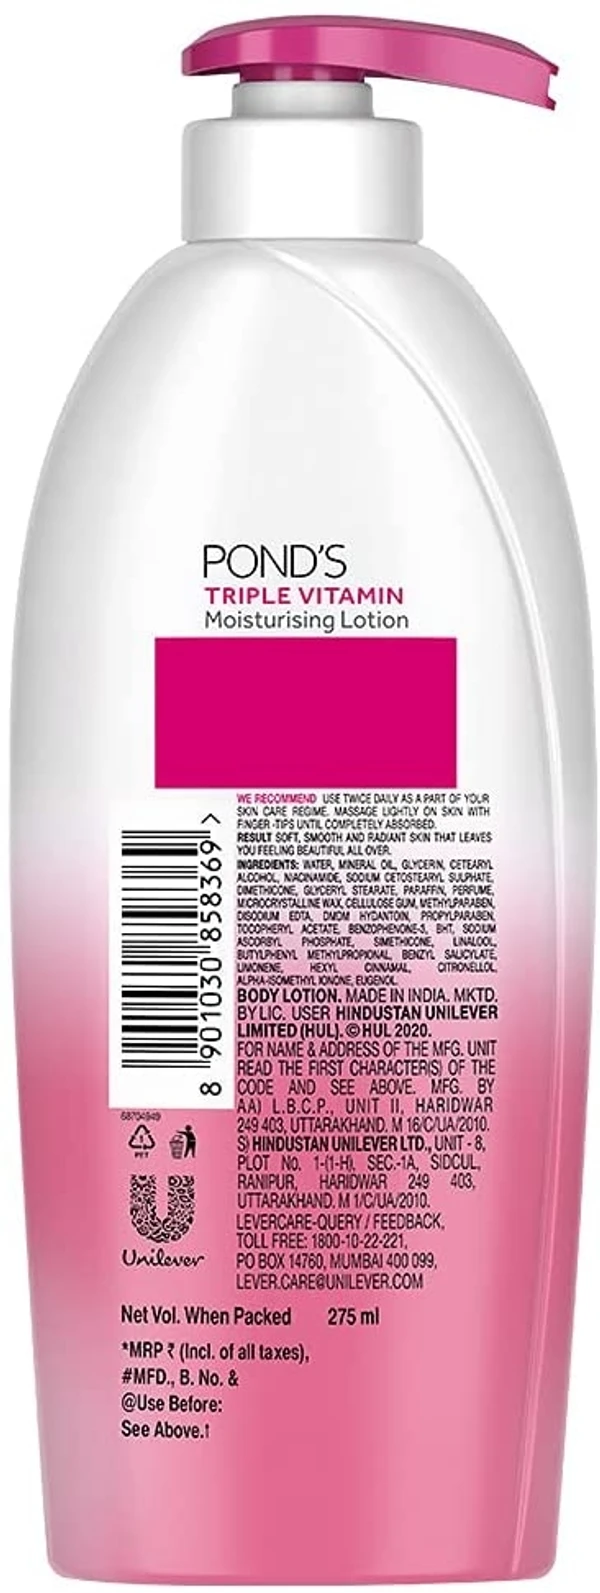 POND'S All Triple Vitamin Moisturising Body Lotion,300ml